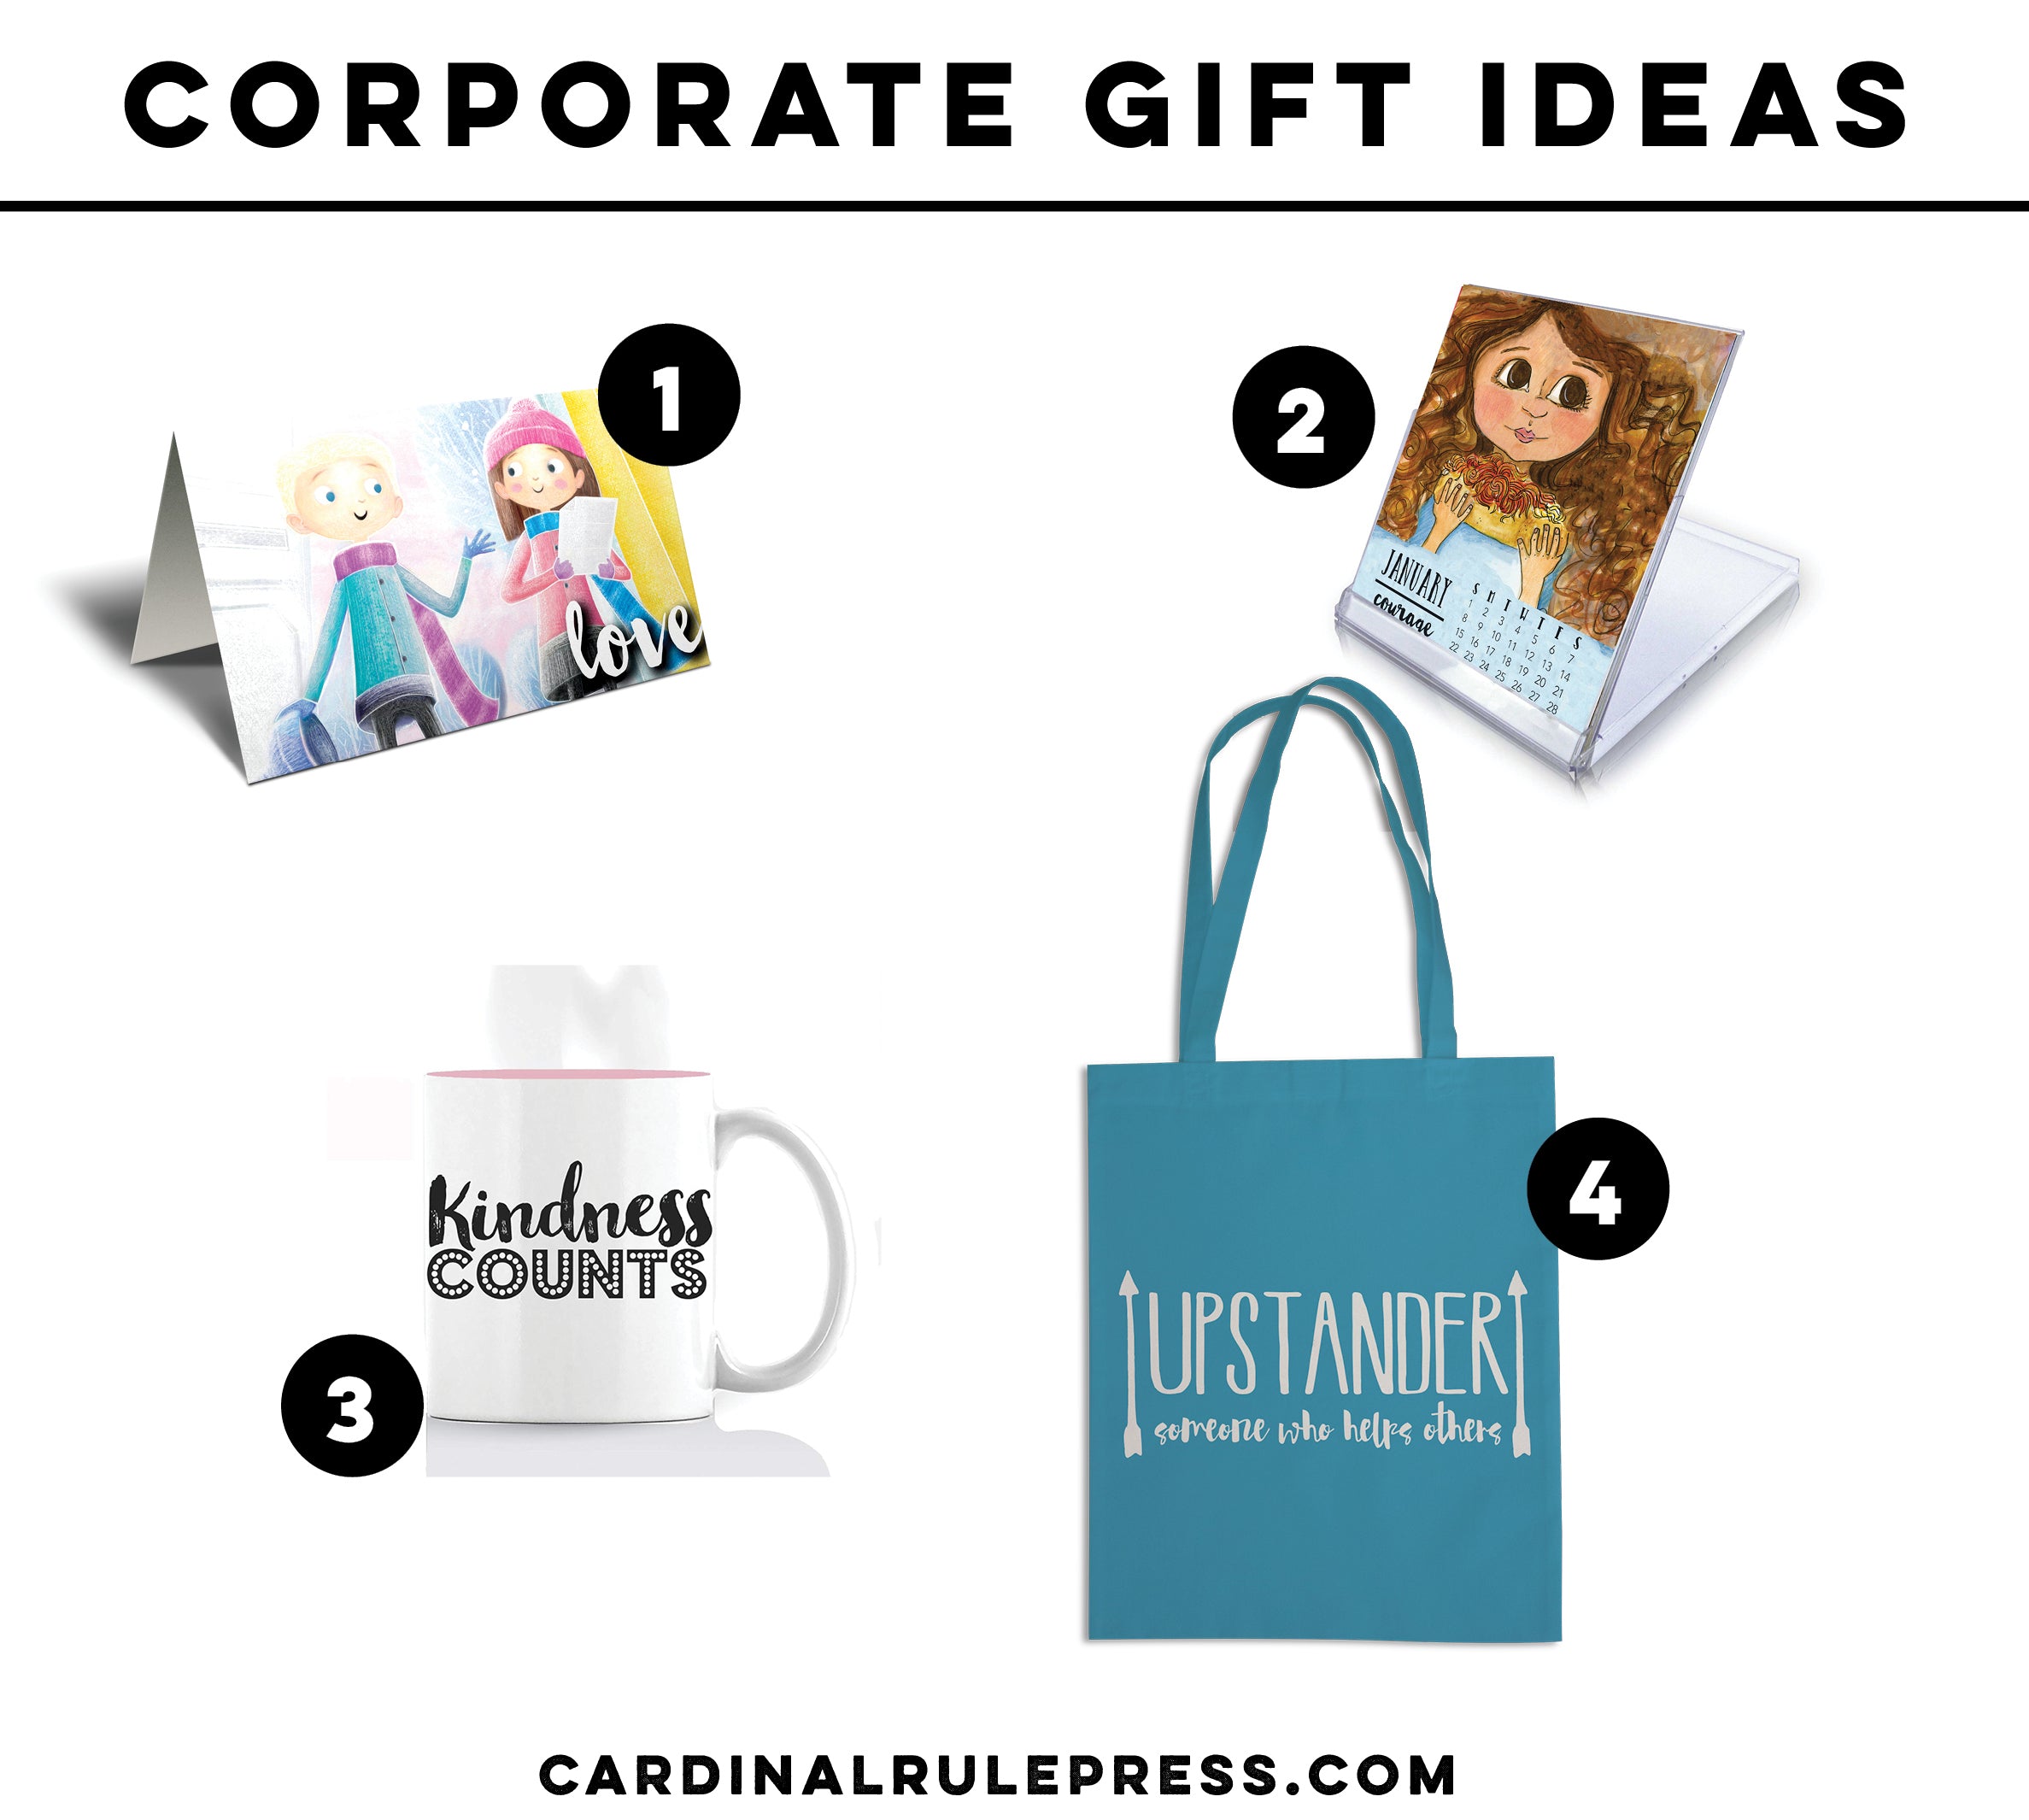 Corporate Gift Guide - cardinalrulepress.com